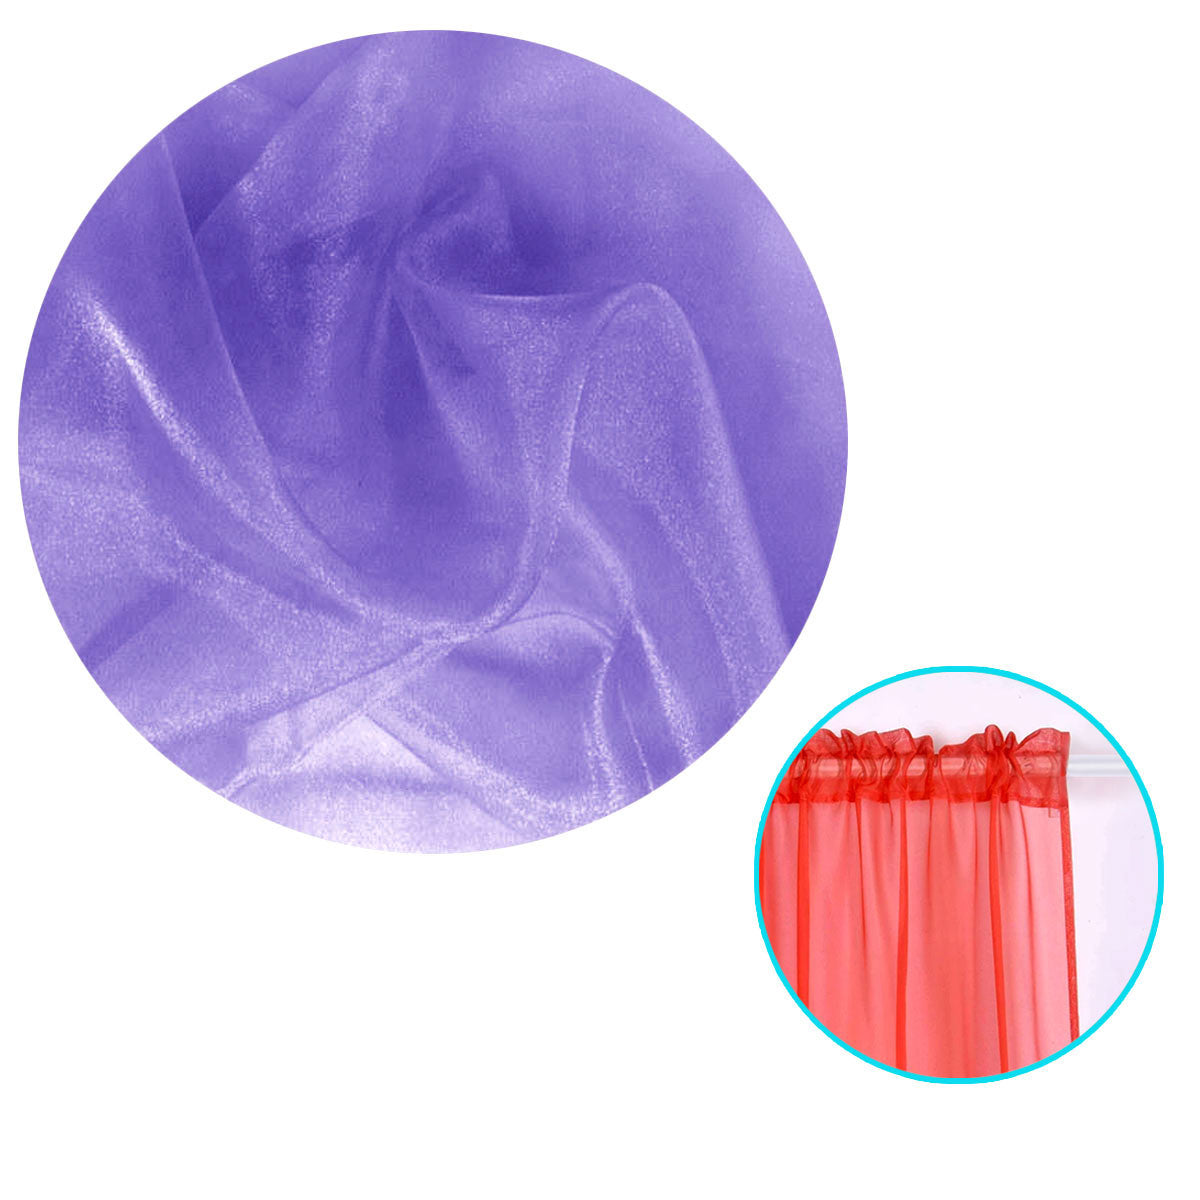 Pair of Organza Sheer Rod Pocket Curtains Purple